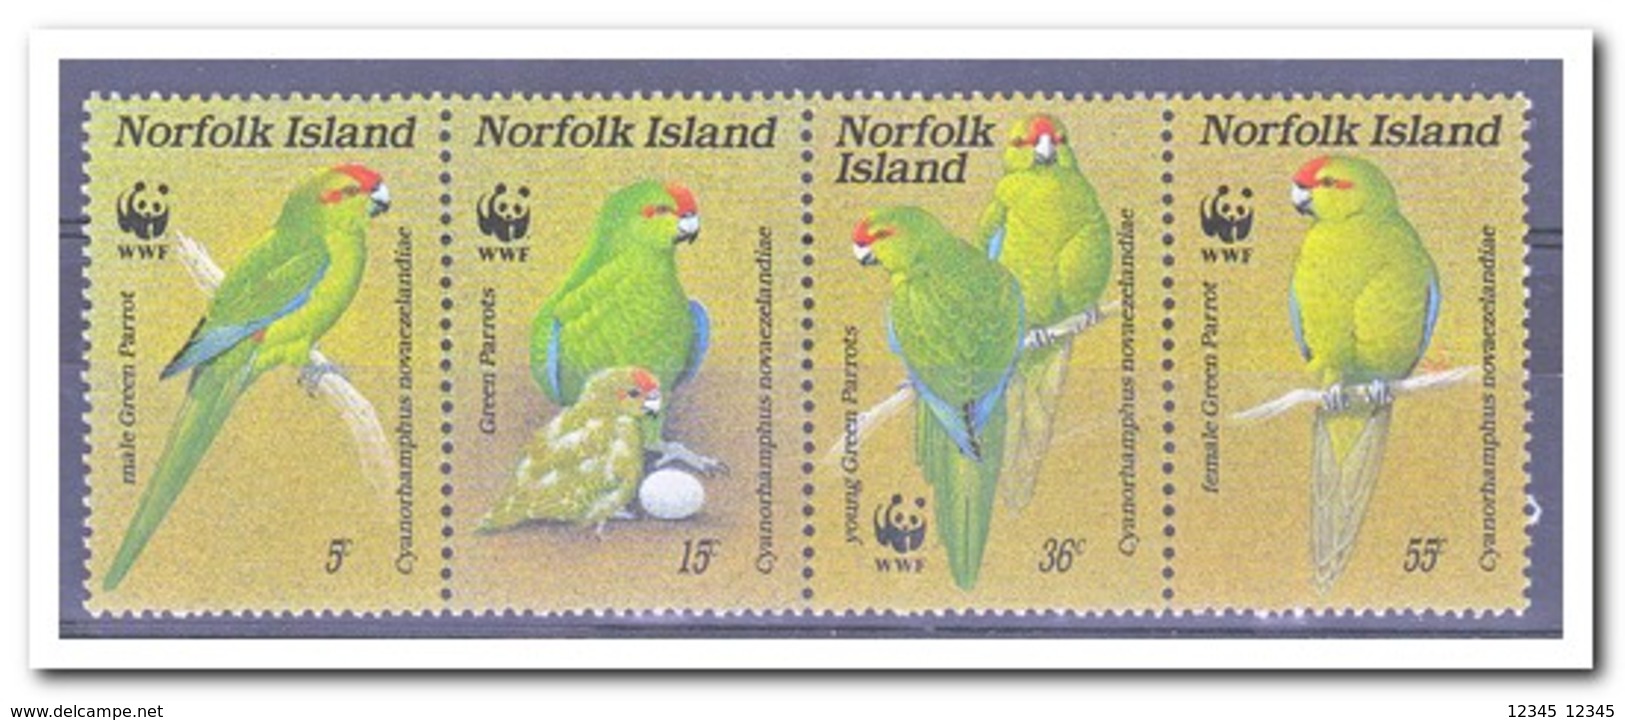 Norfolk 1987, Postfris MNH, Birds - Norfolk Island